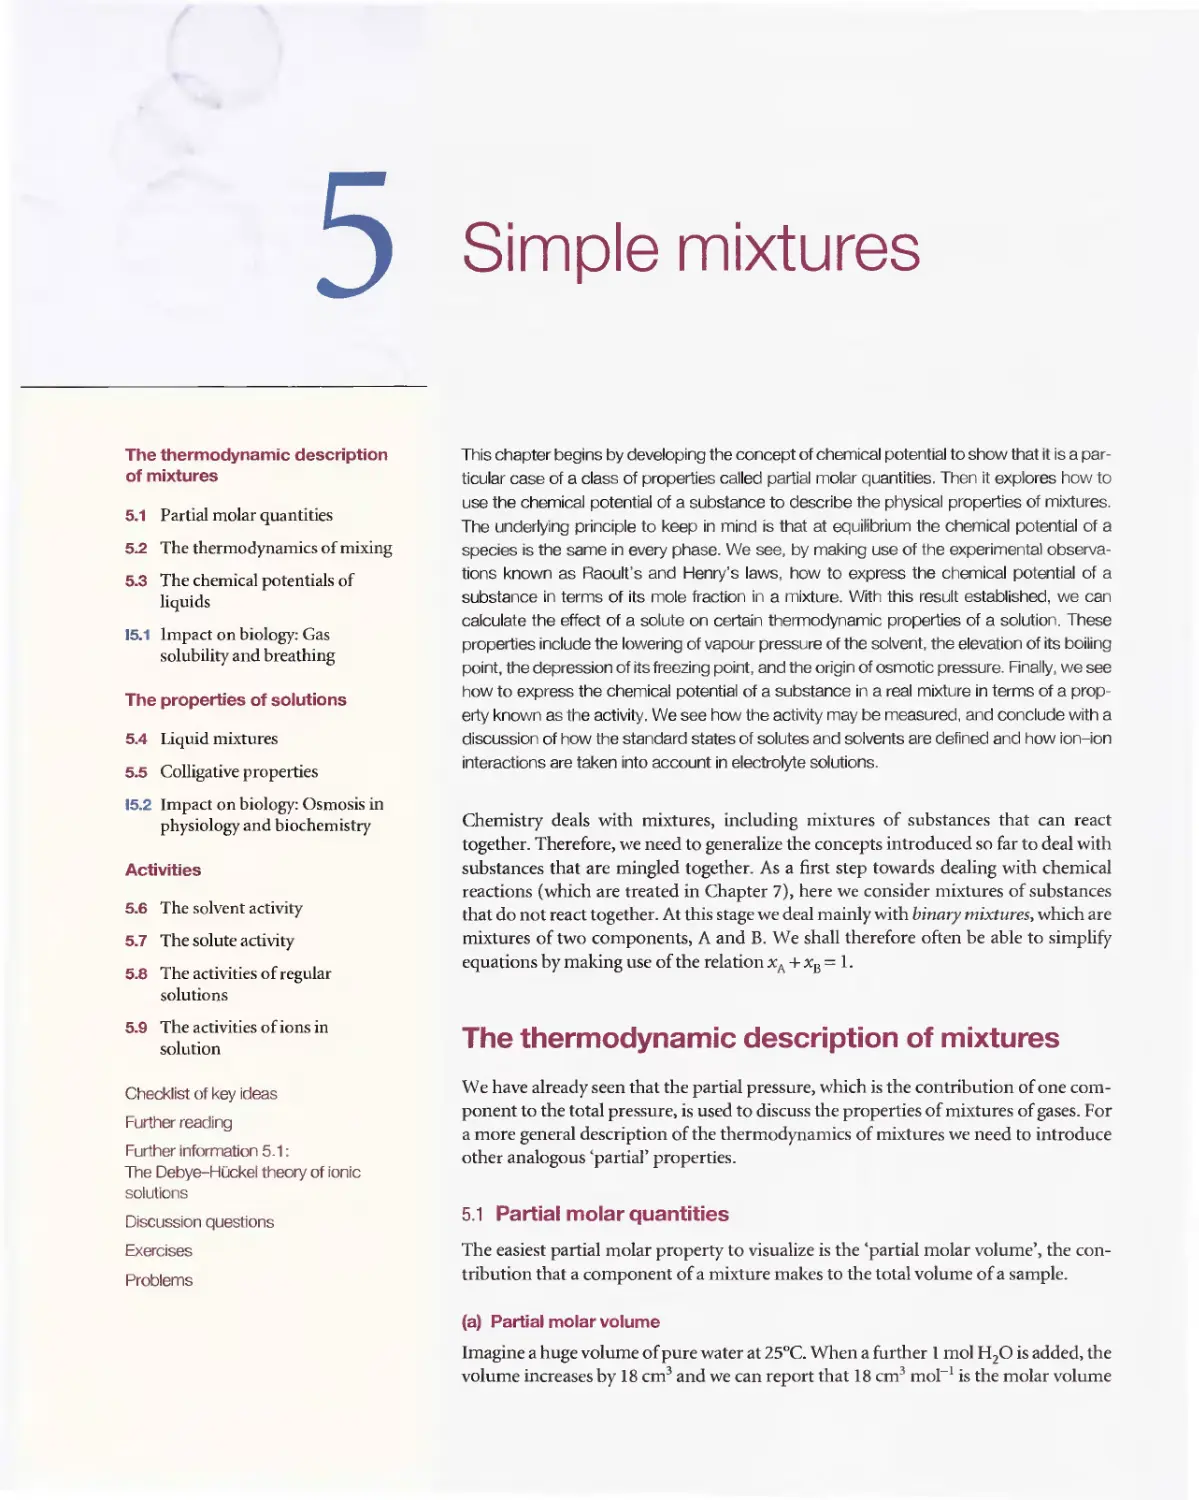 5 - Simple mixtures